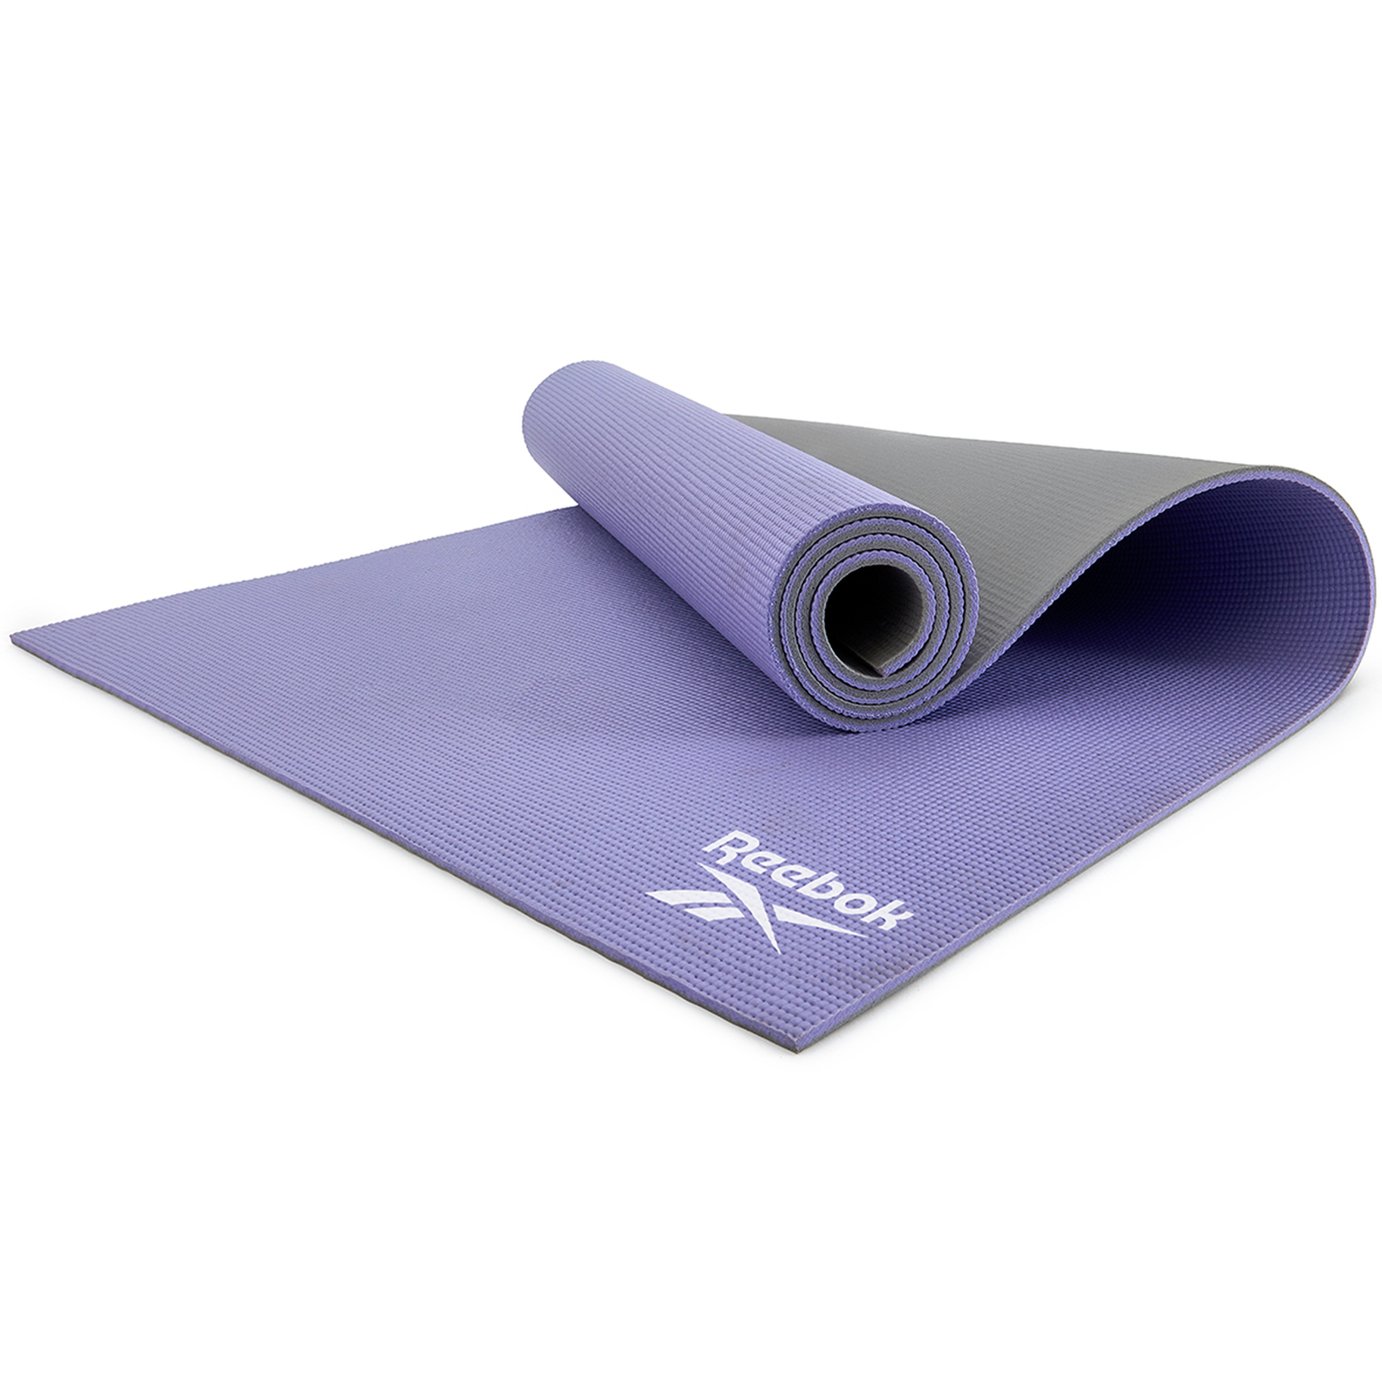 Reebok Purple and Grey 6mm Thickness Yoga Mat